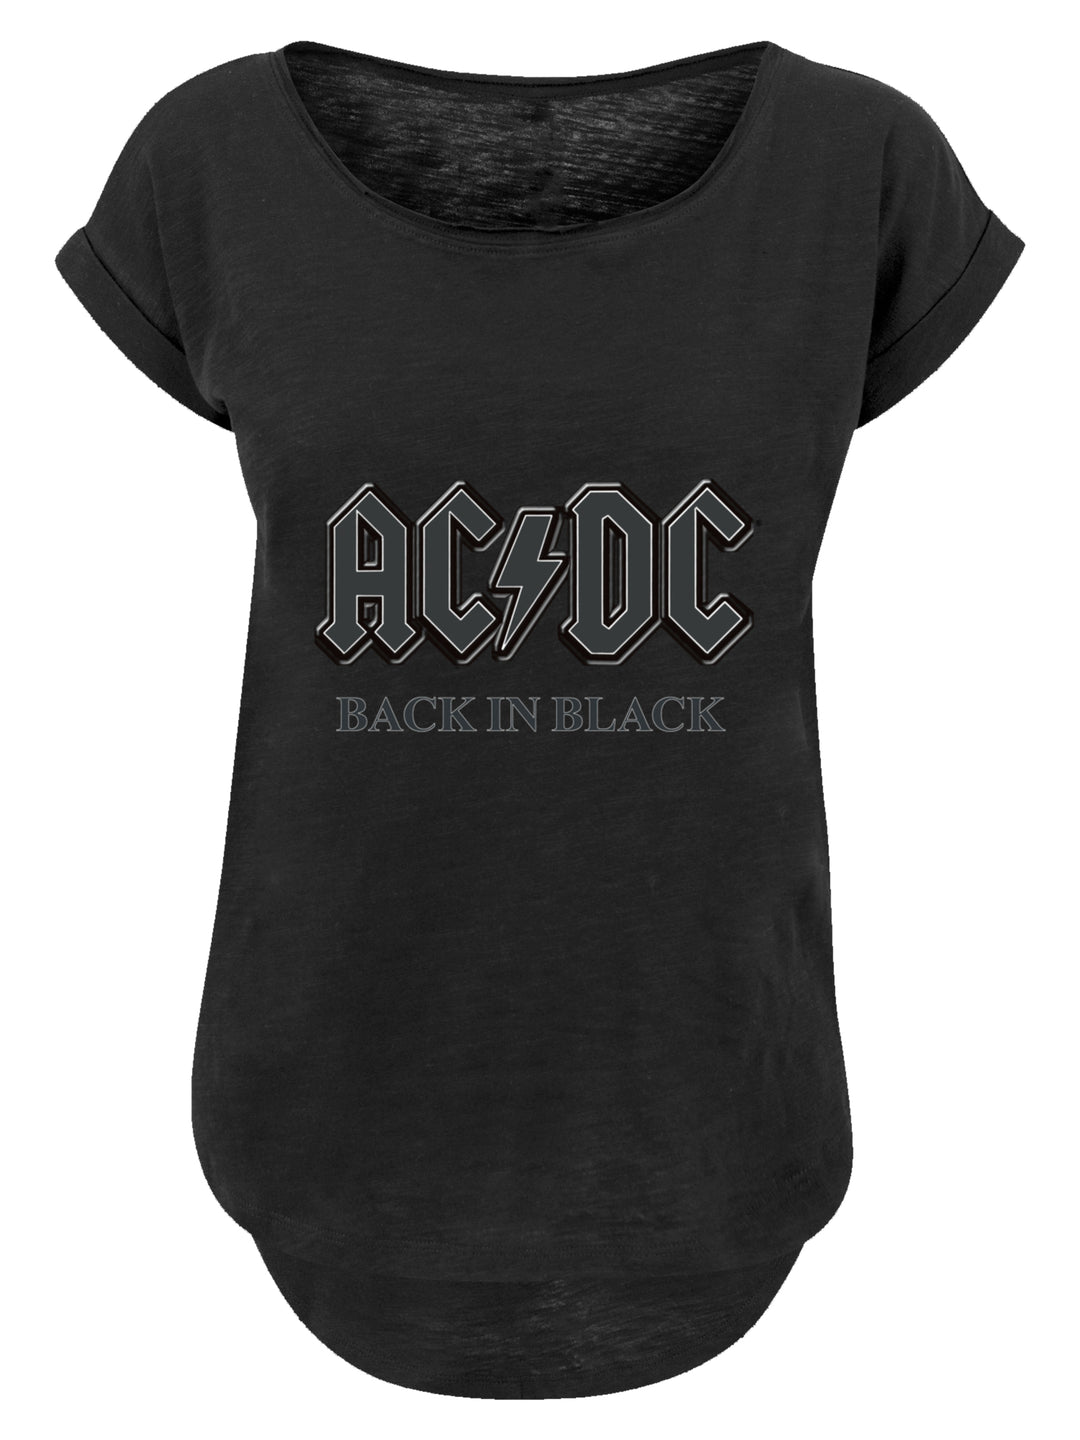 AC/DC Back in Black Ladies Long Slub Tee - Stylishly Celebrating the Power of Classic Rock